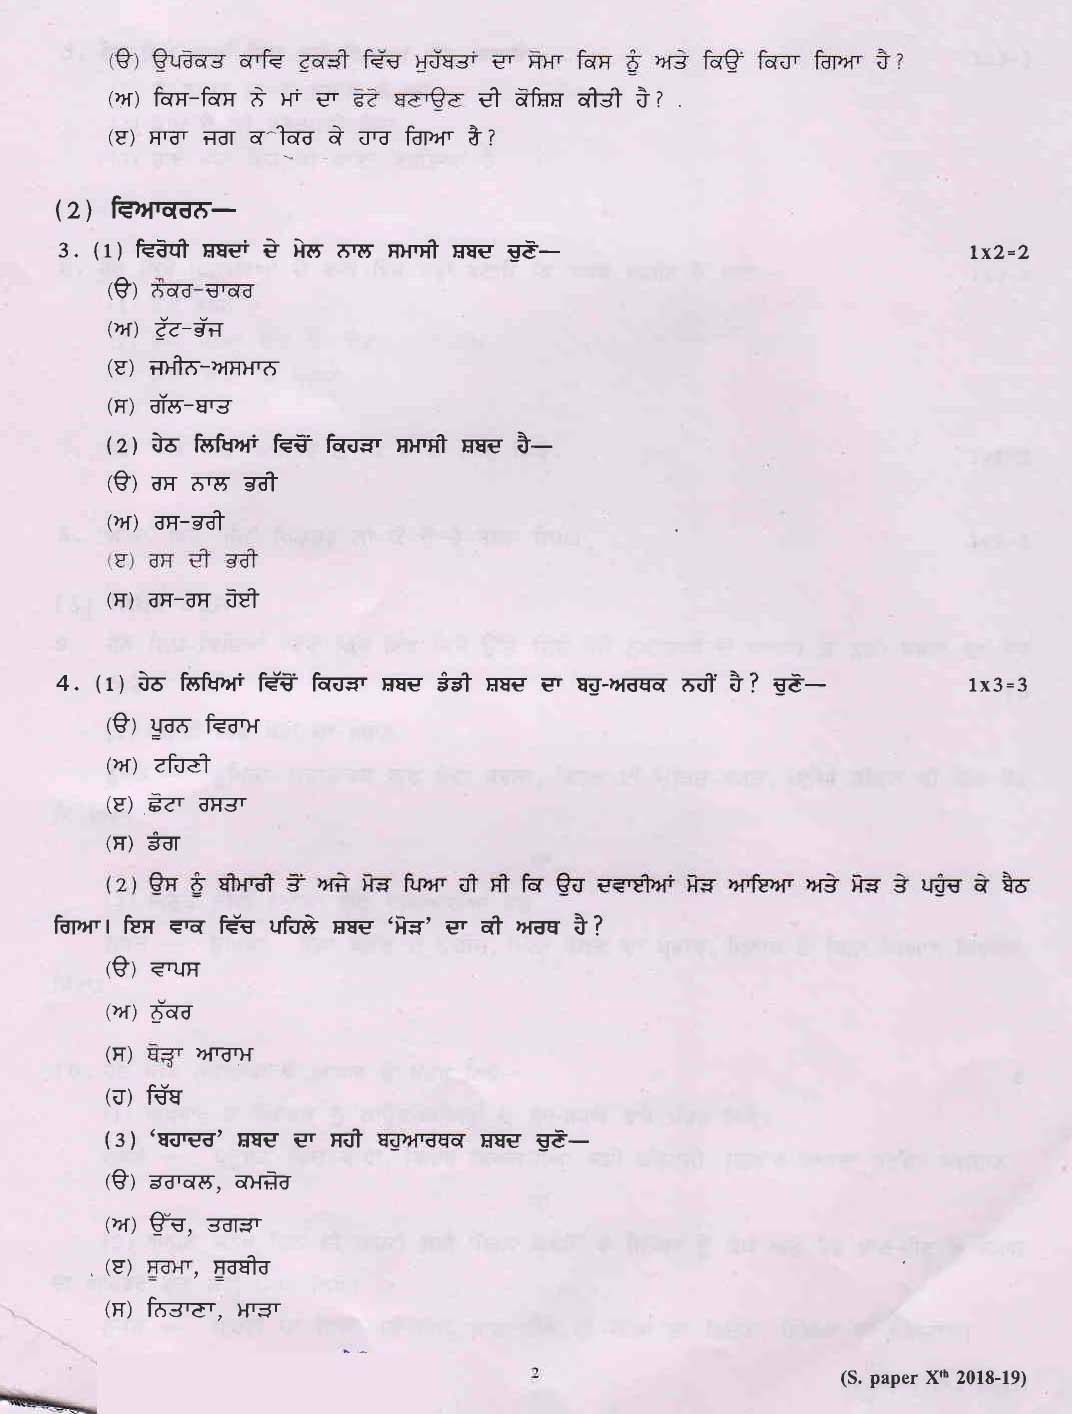 Punjabi CBSE Class X Sample Question Paper 2018-19 - Image 2